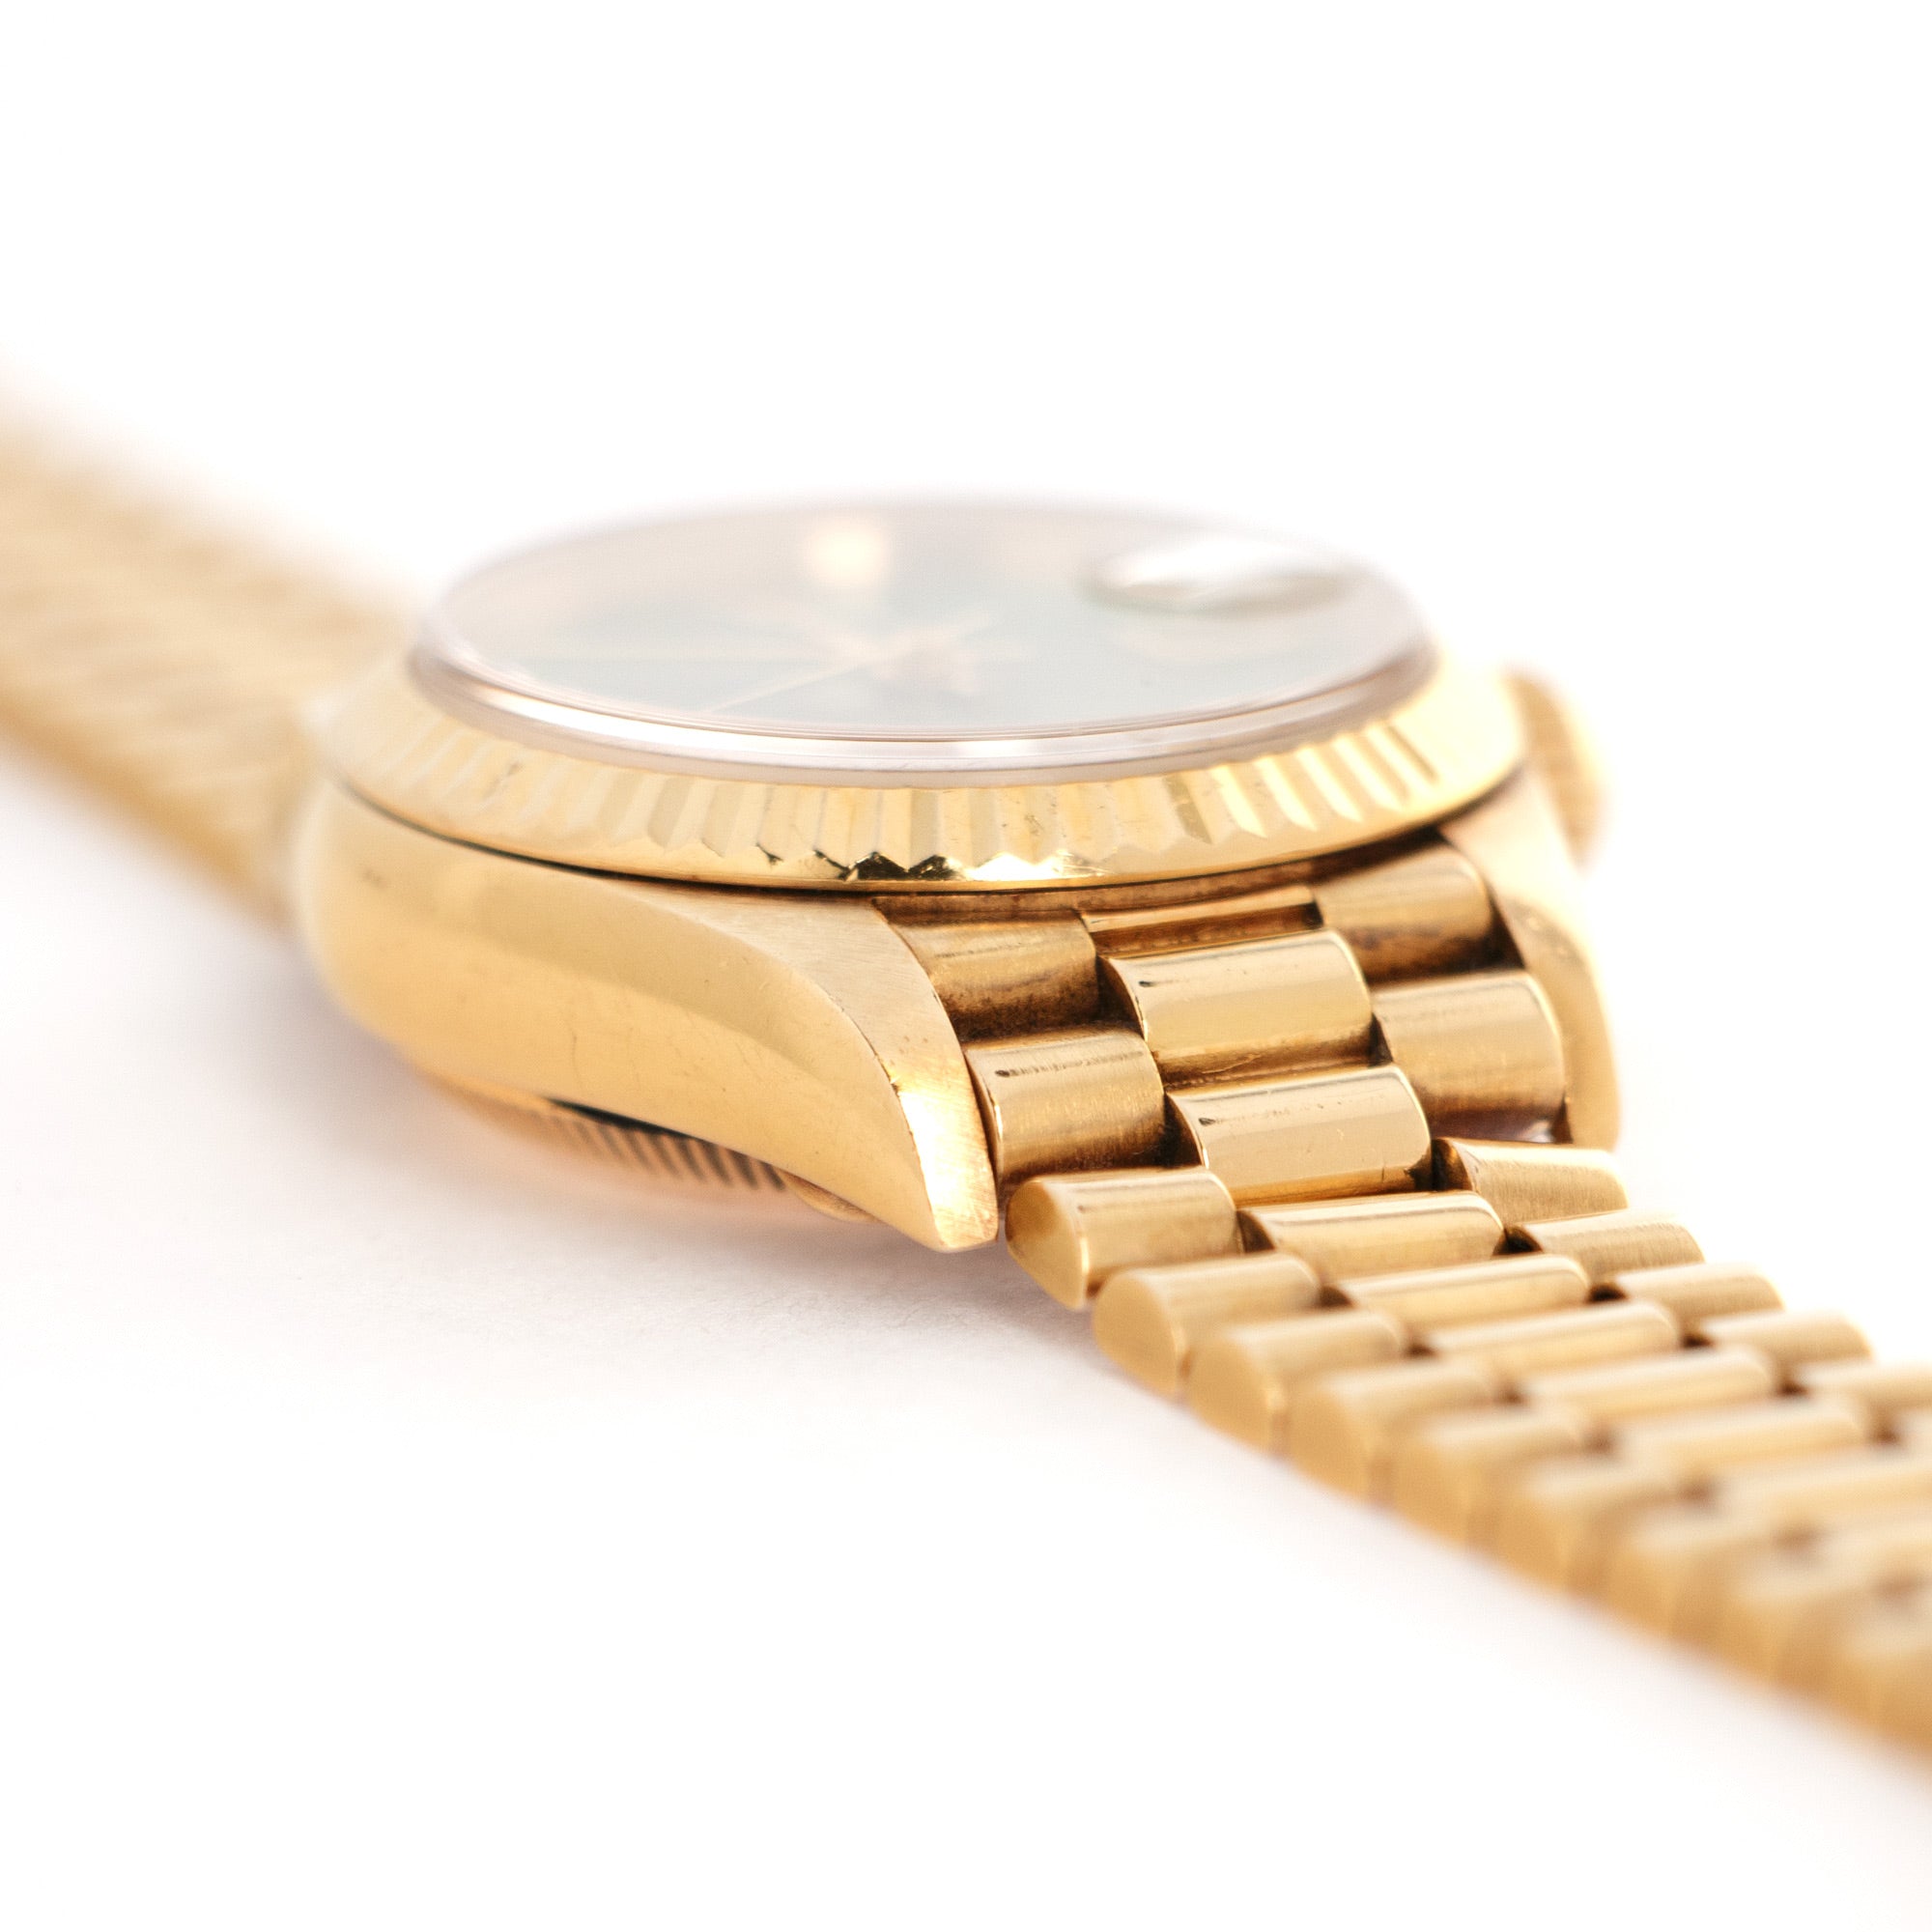 Rolex - Rolex Yellow Gold Datejust Malachite Dial Watch Ref. 69178 - The Keystone Watches